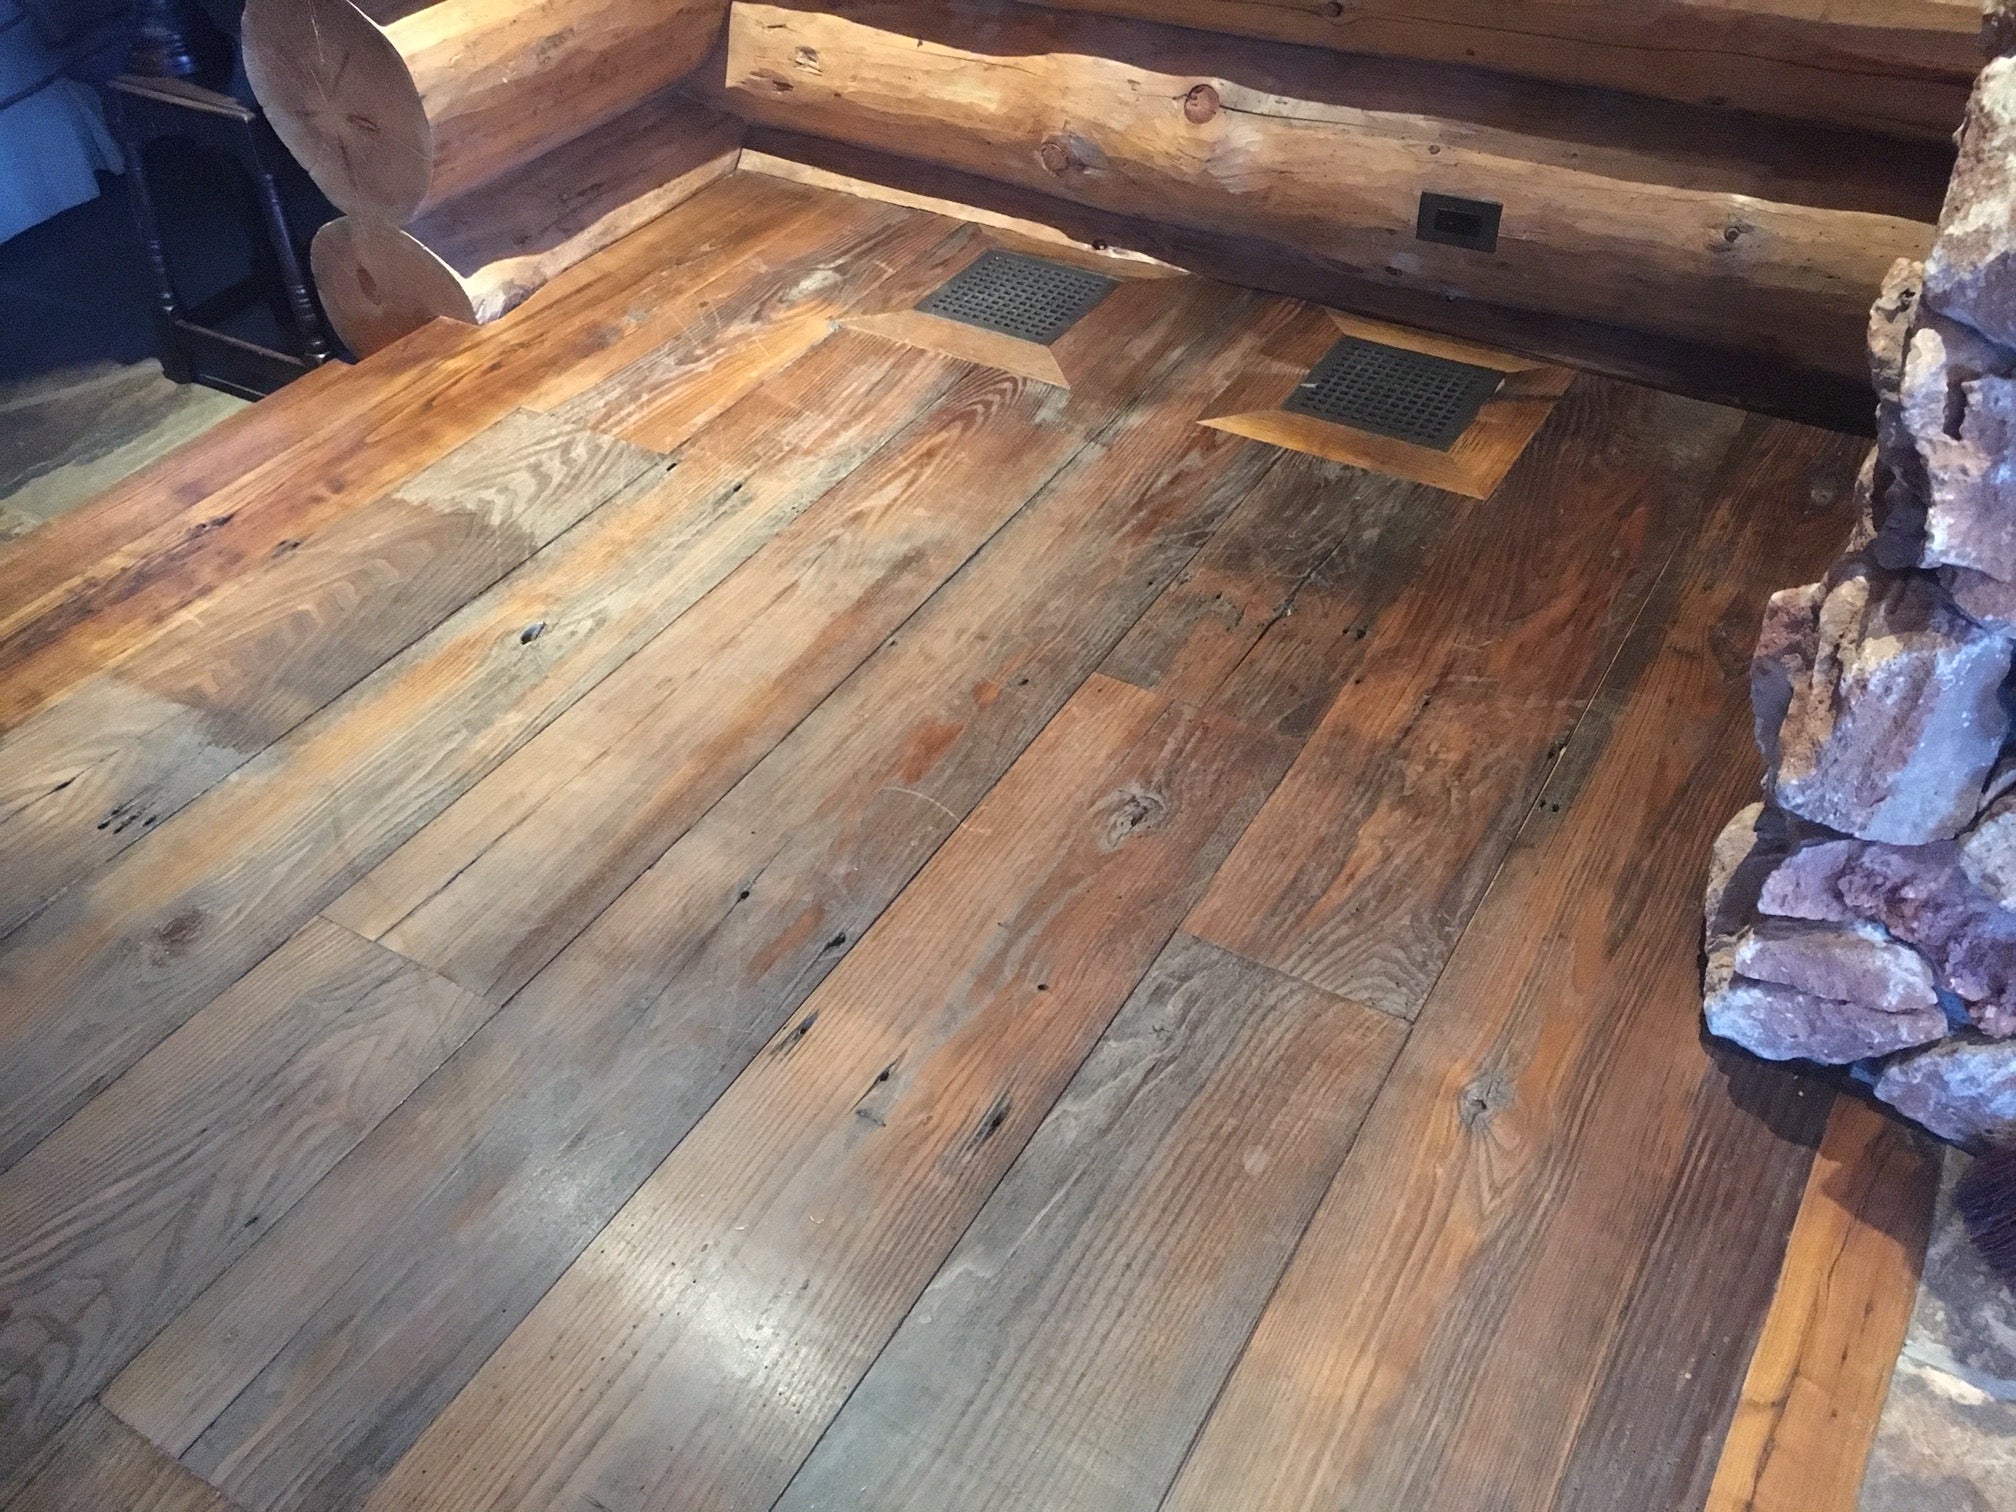 Damaged wood floor